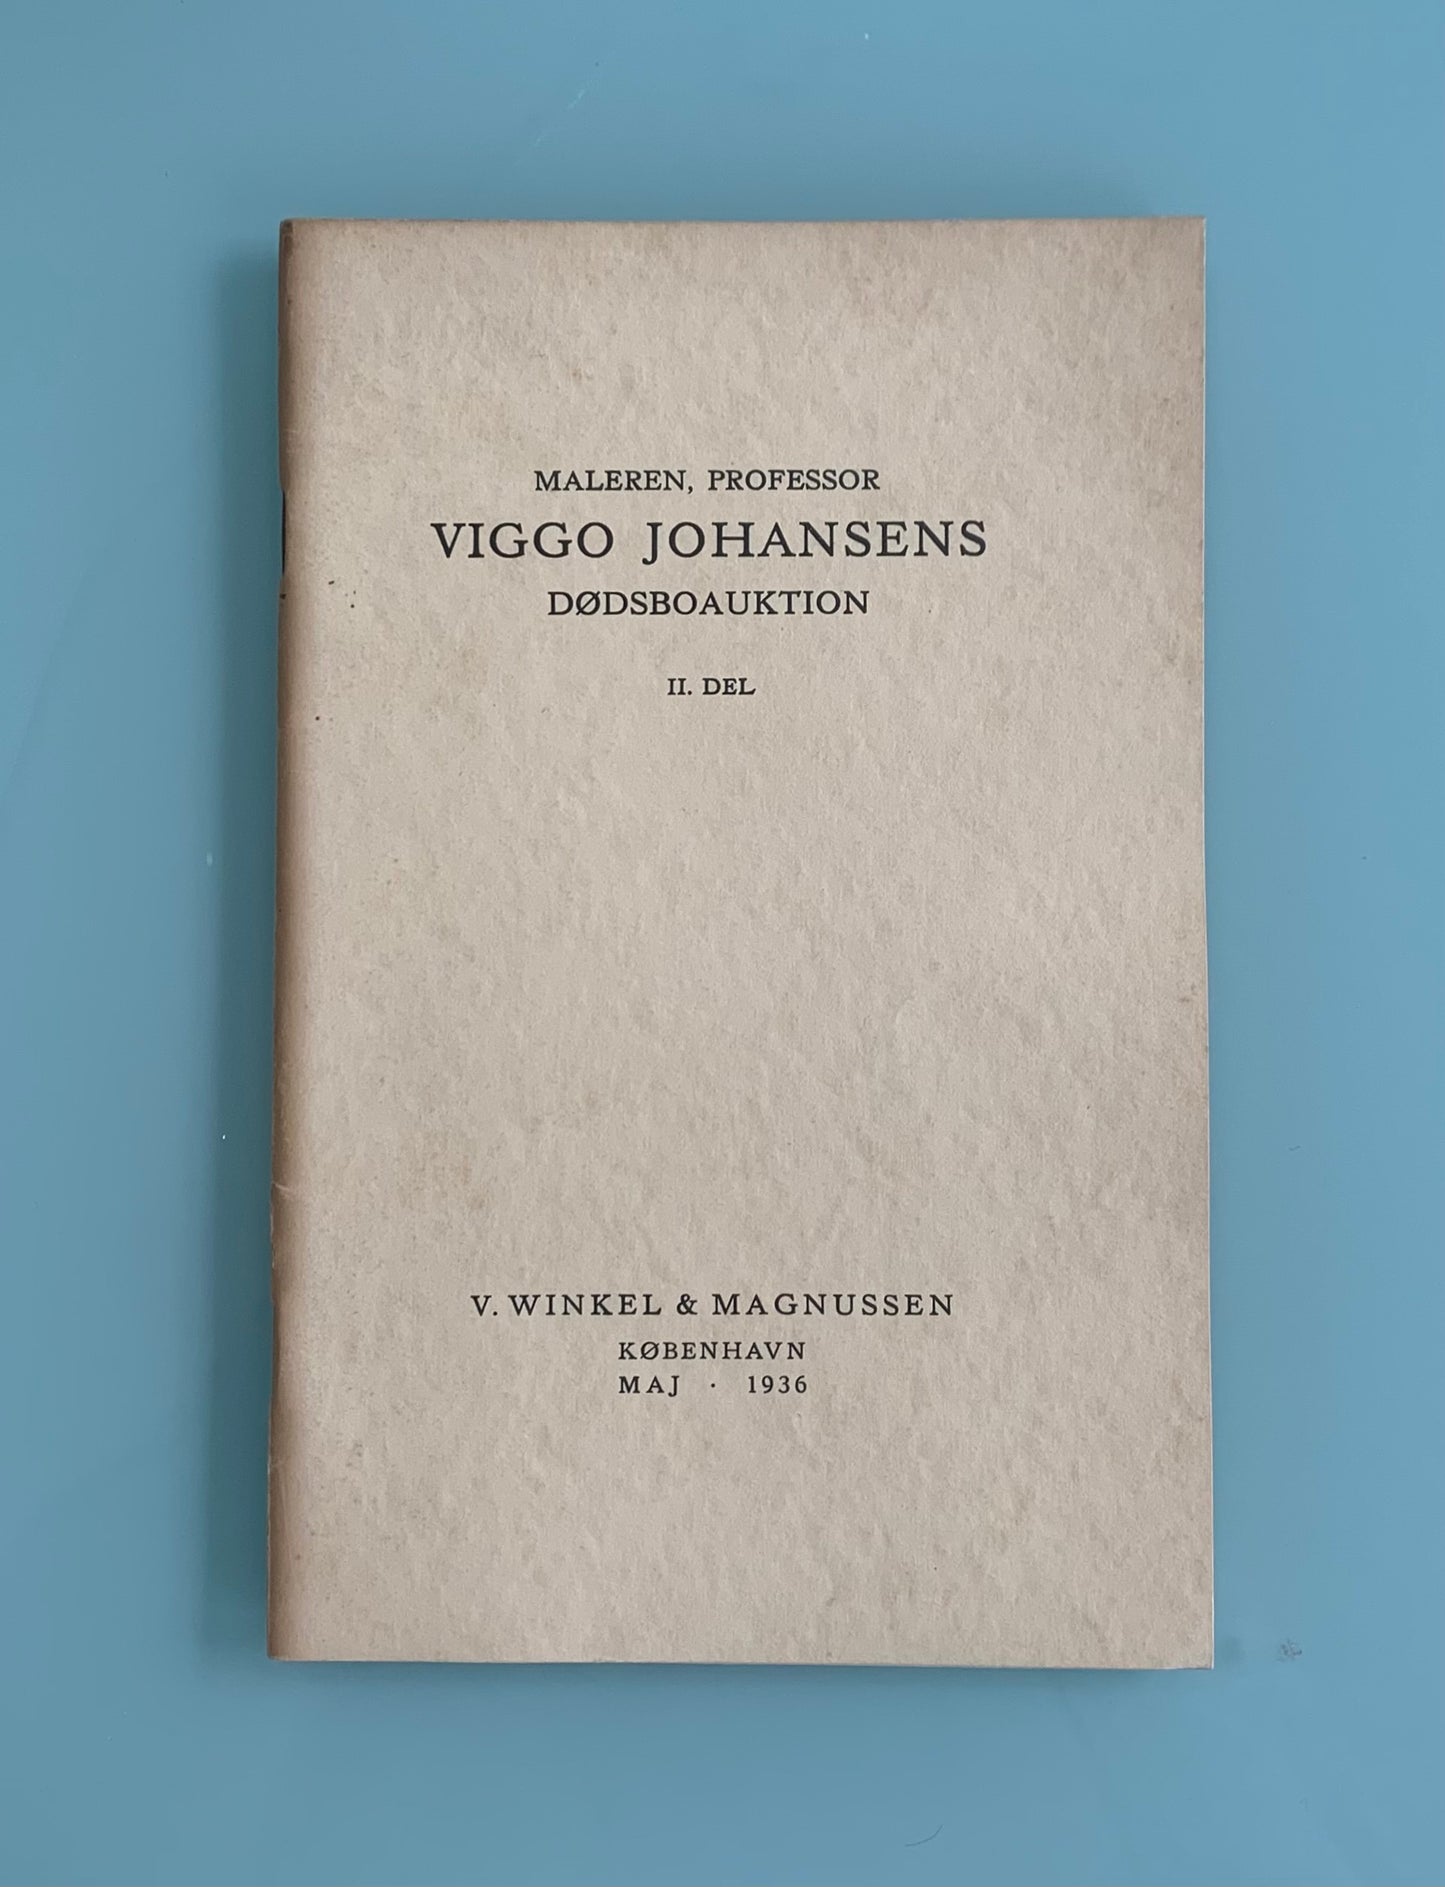 Viggo Johansen. Catalog from the artists estate auction, 1936